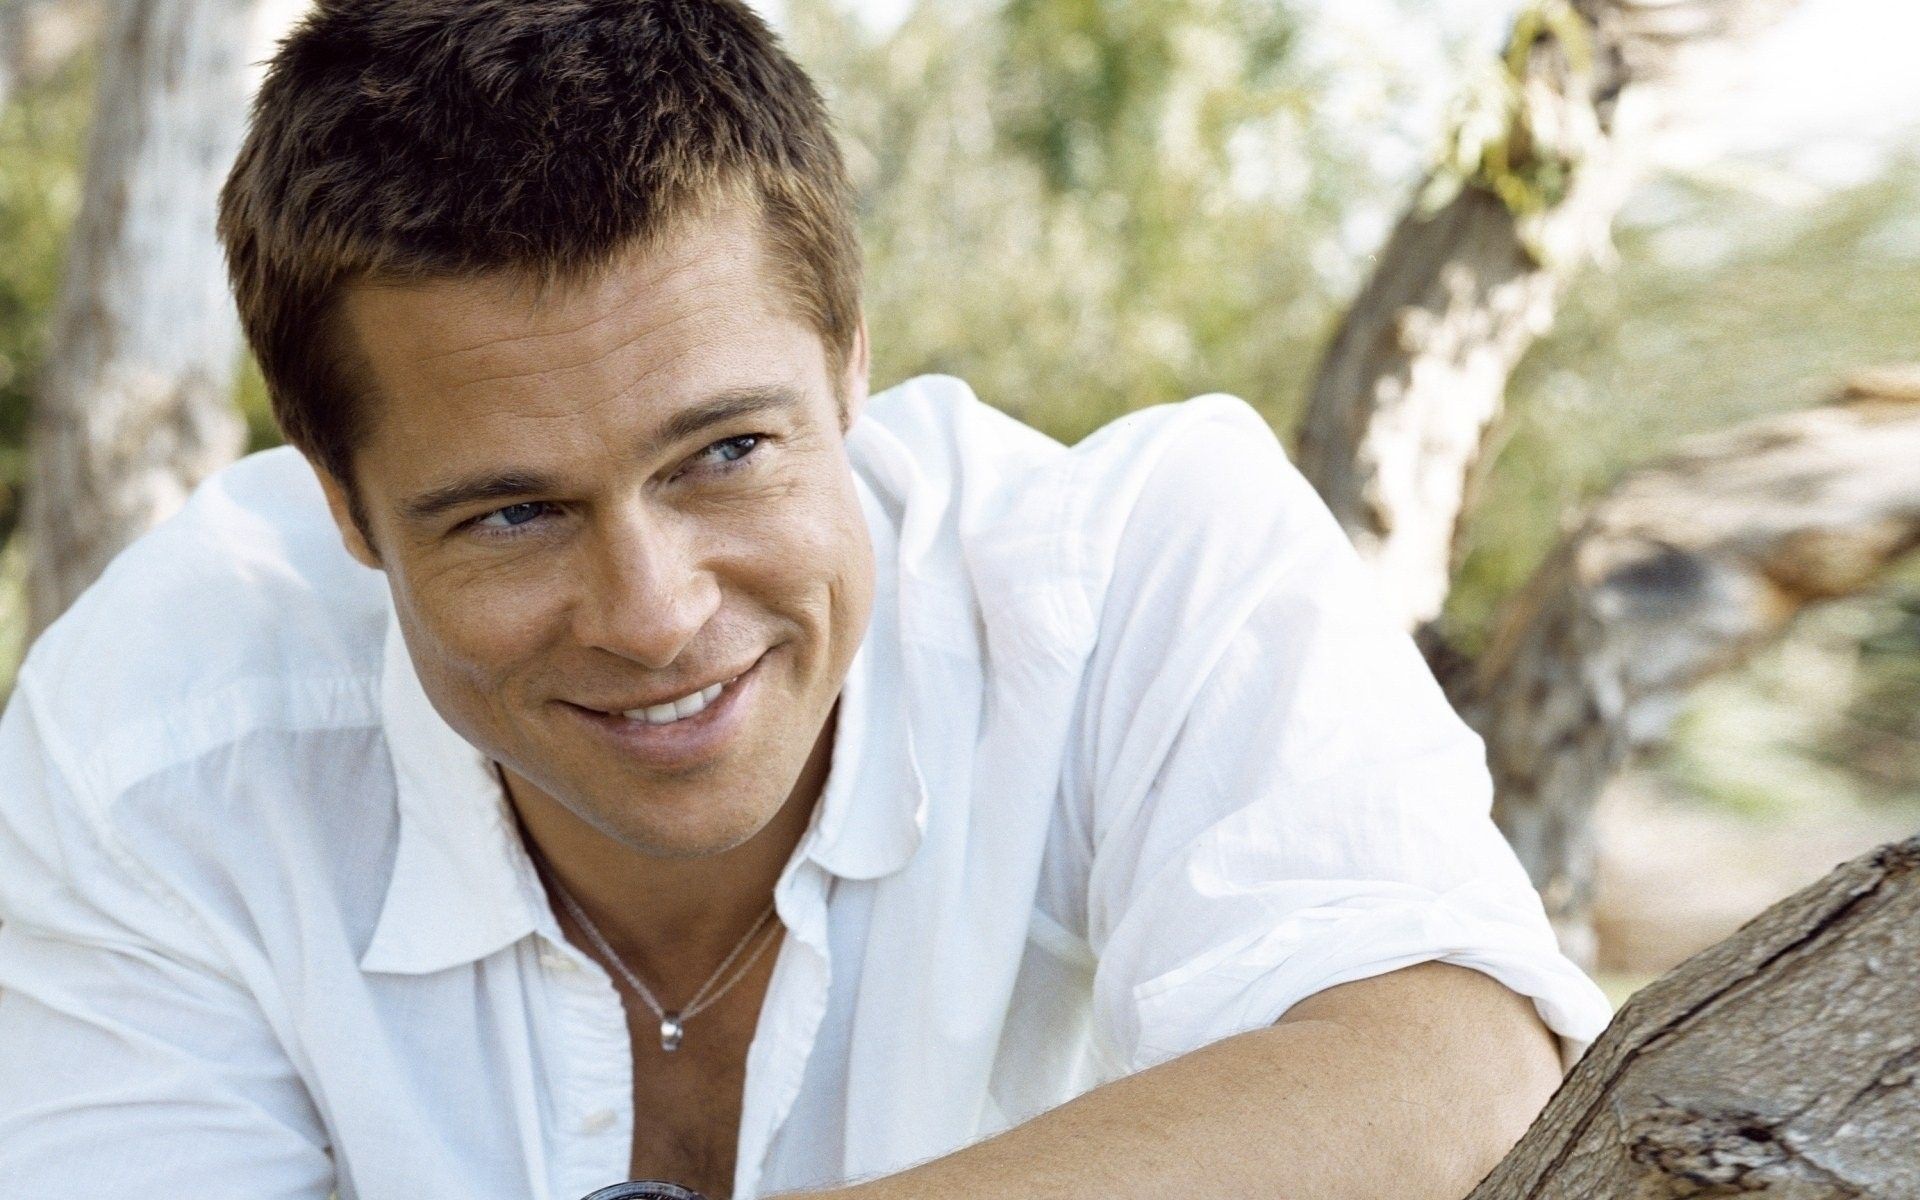 Brad Pitt in White Shirt With Smiling